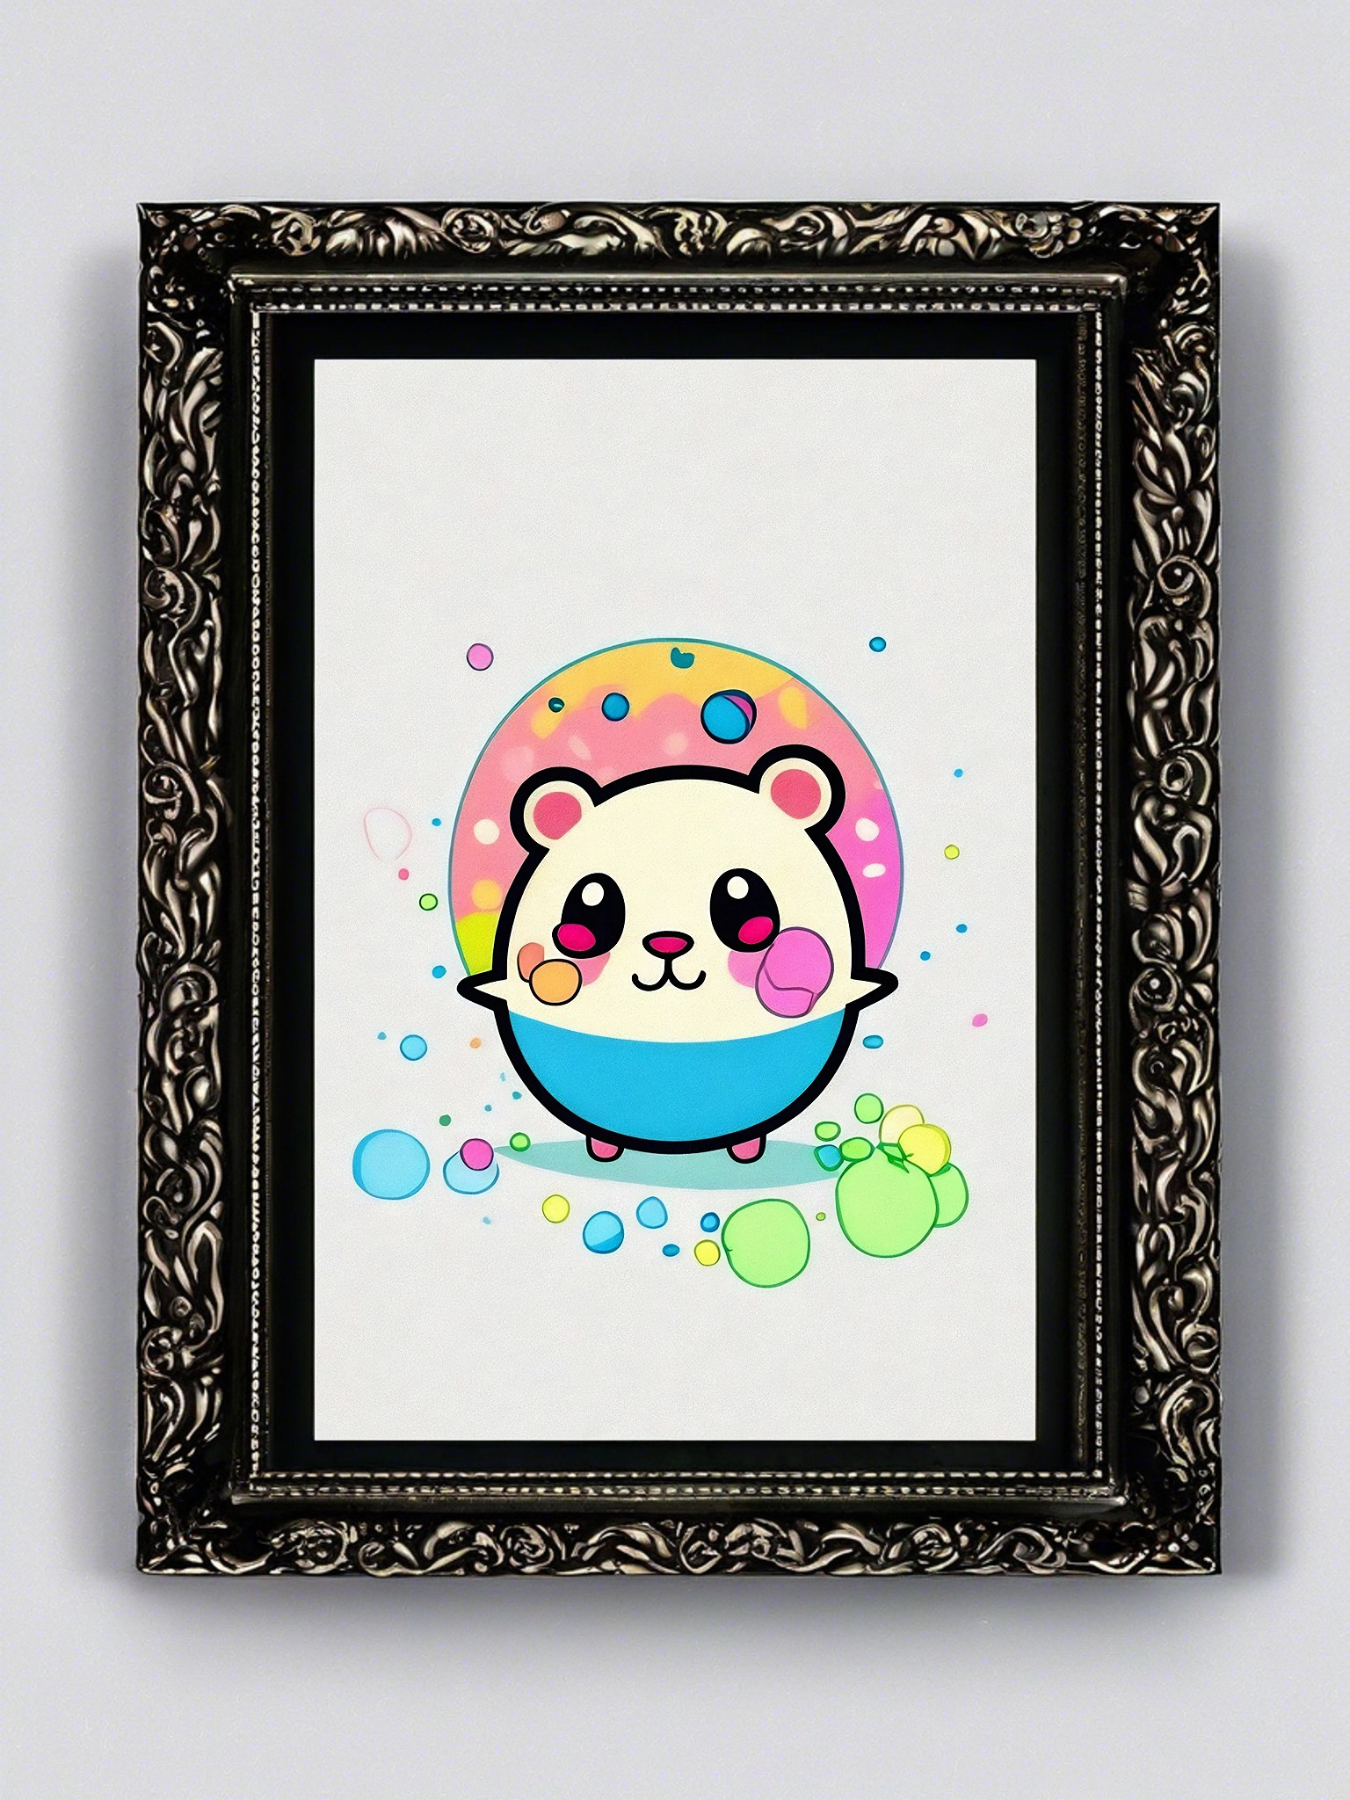 Chewy der süße Kaugummi Hamster - Mini Poster - 20x30cm 3